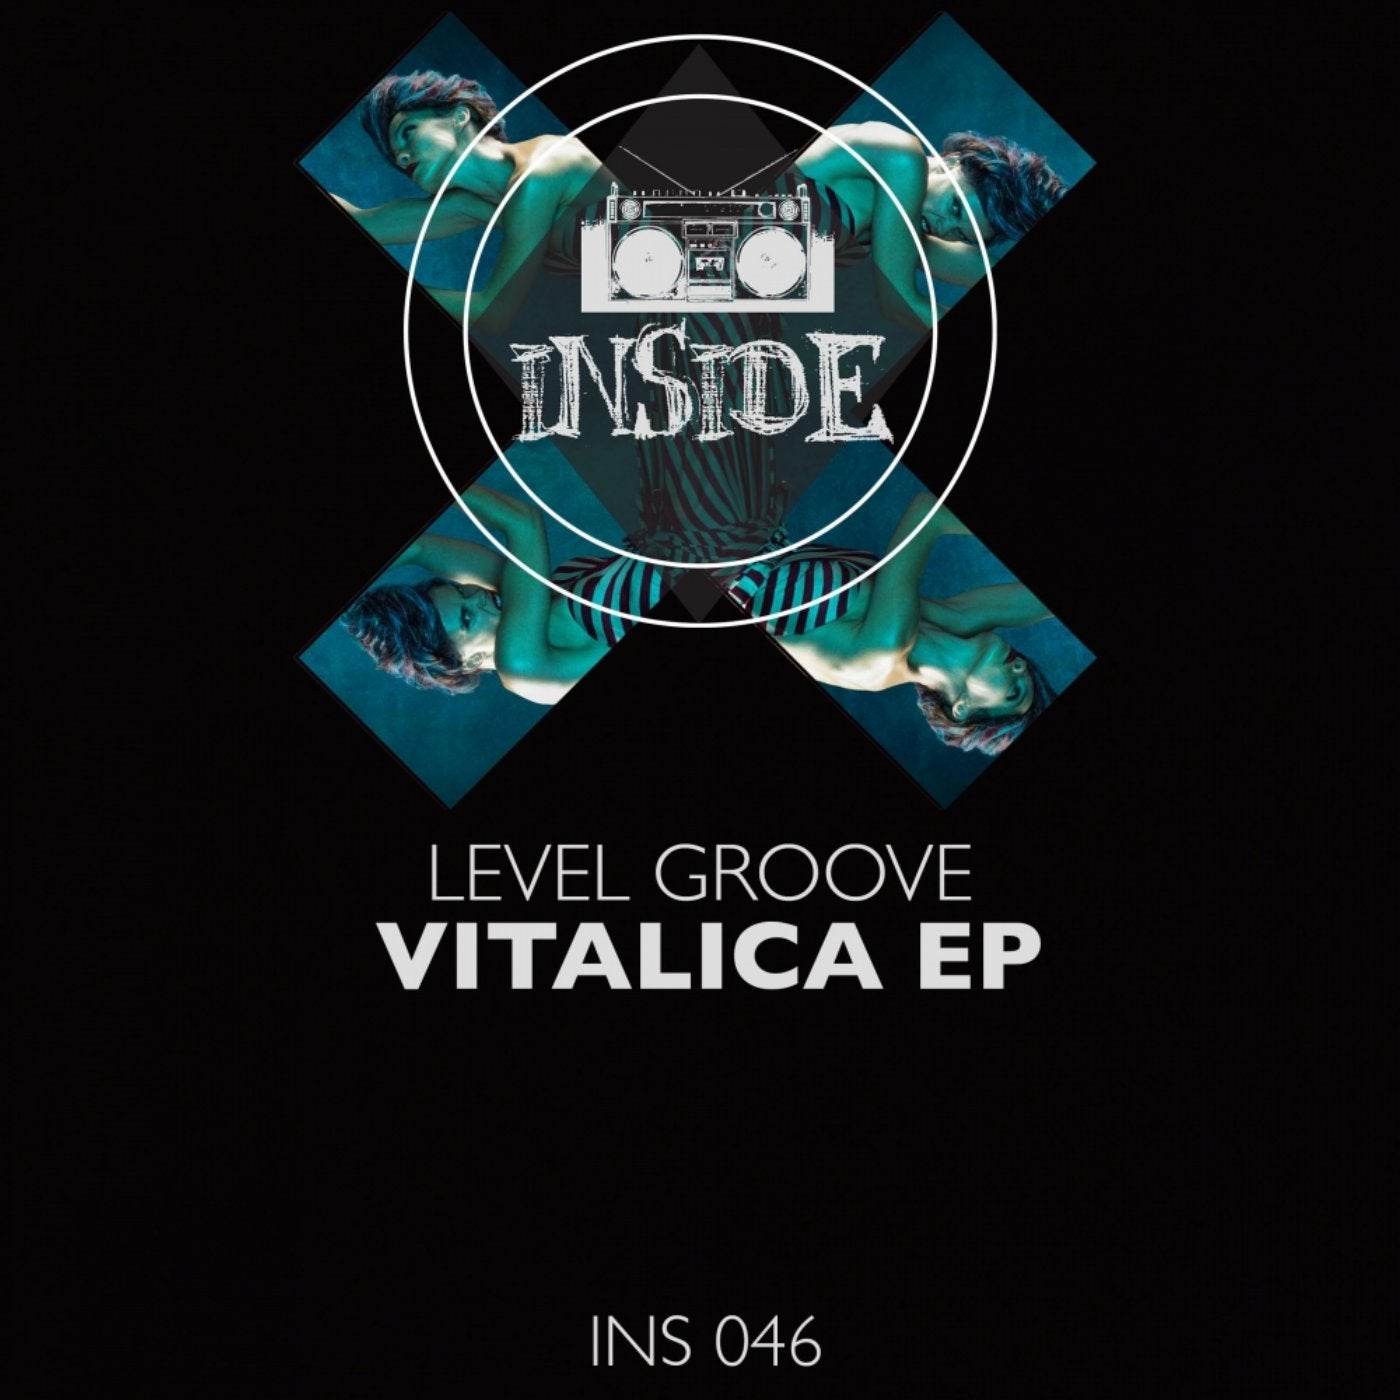 Vitalica EP